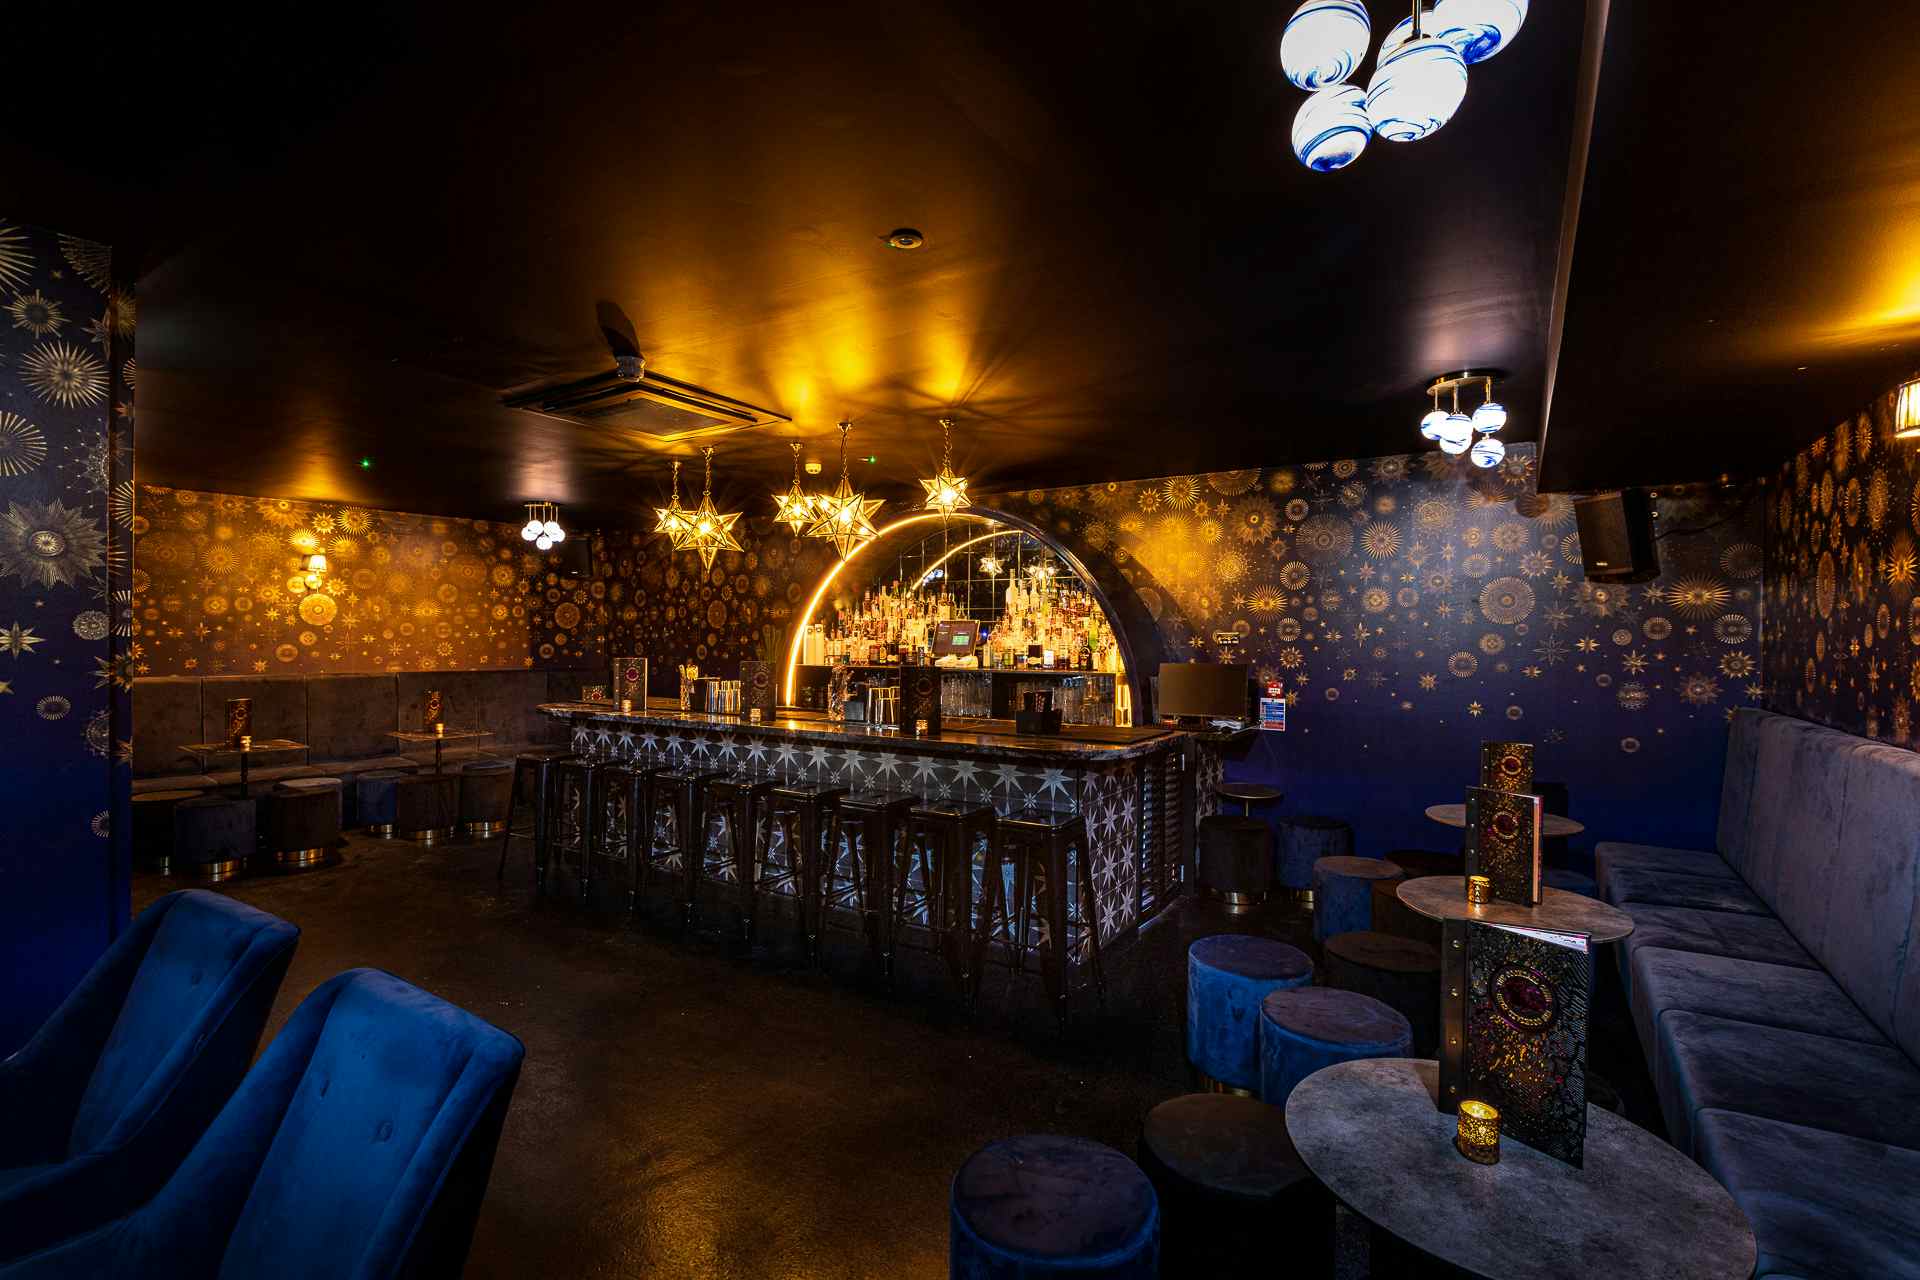 Star Bar, The Cocktail Club Birmingham